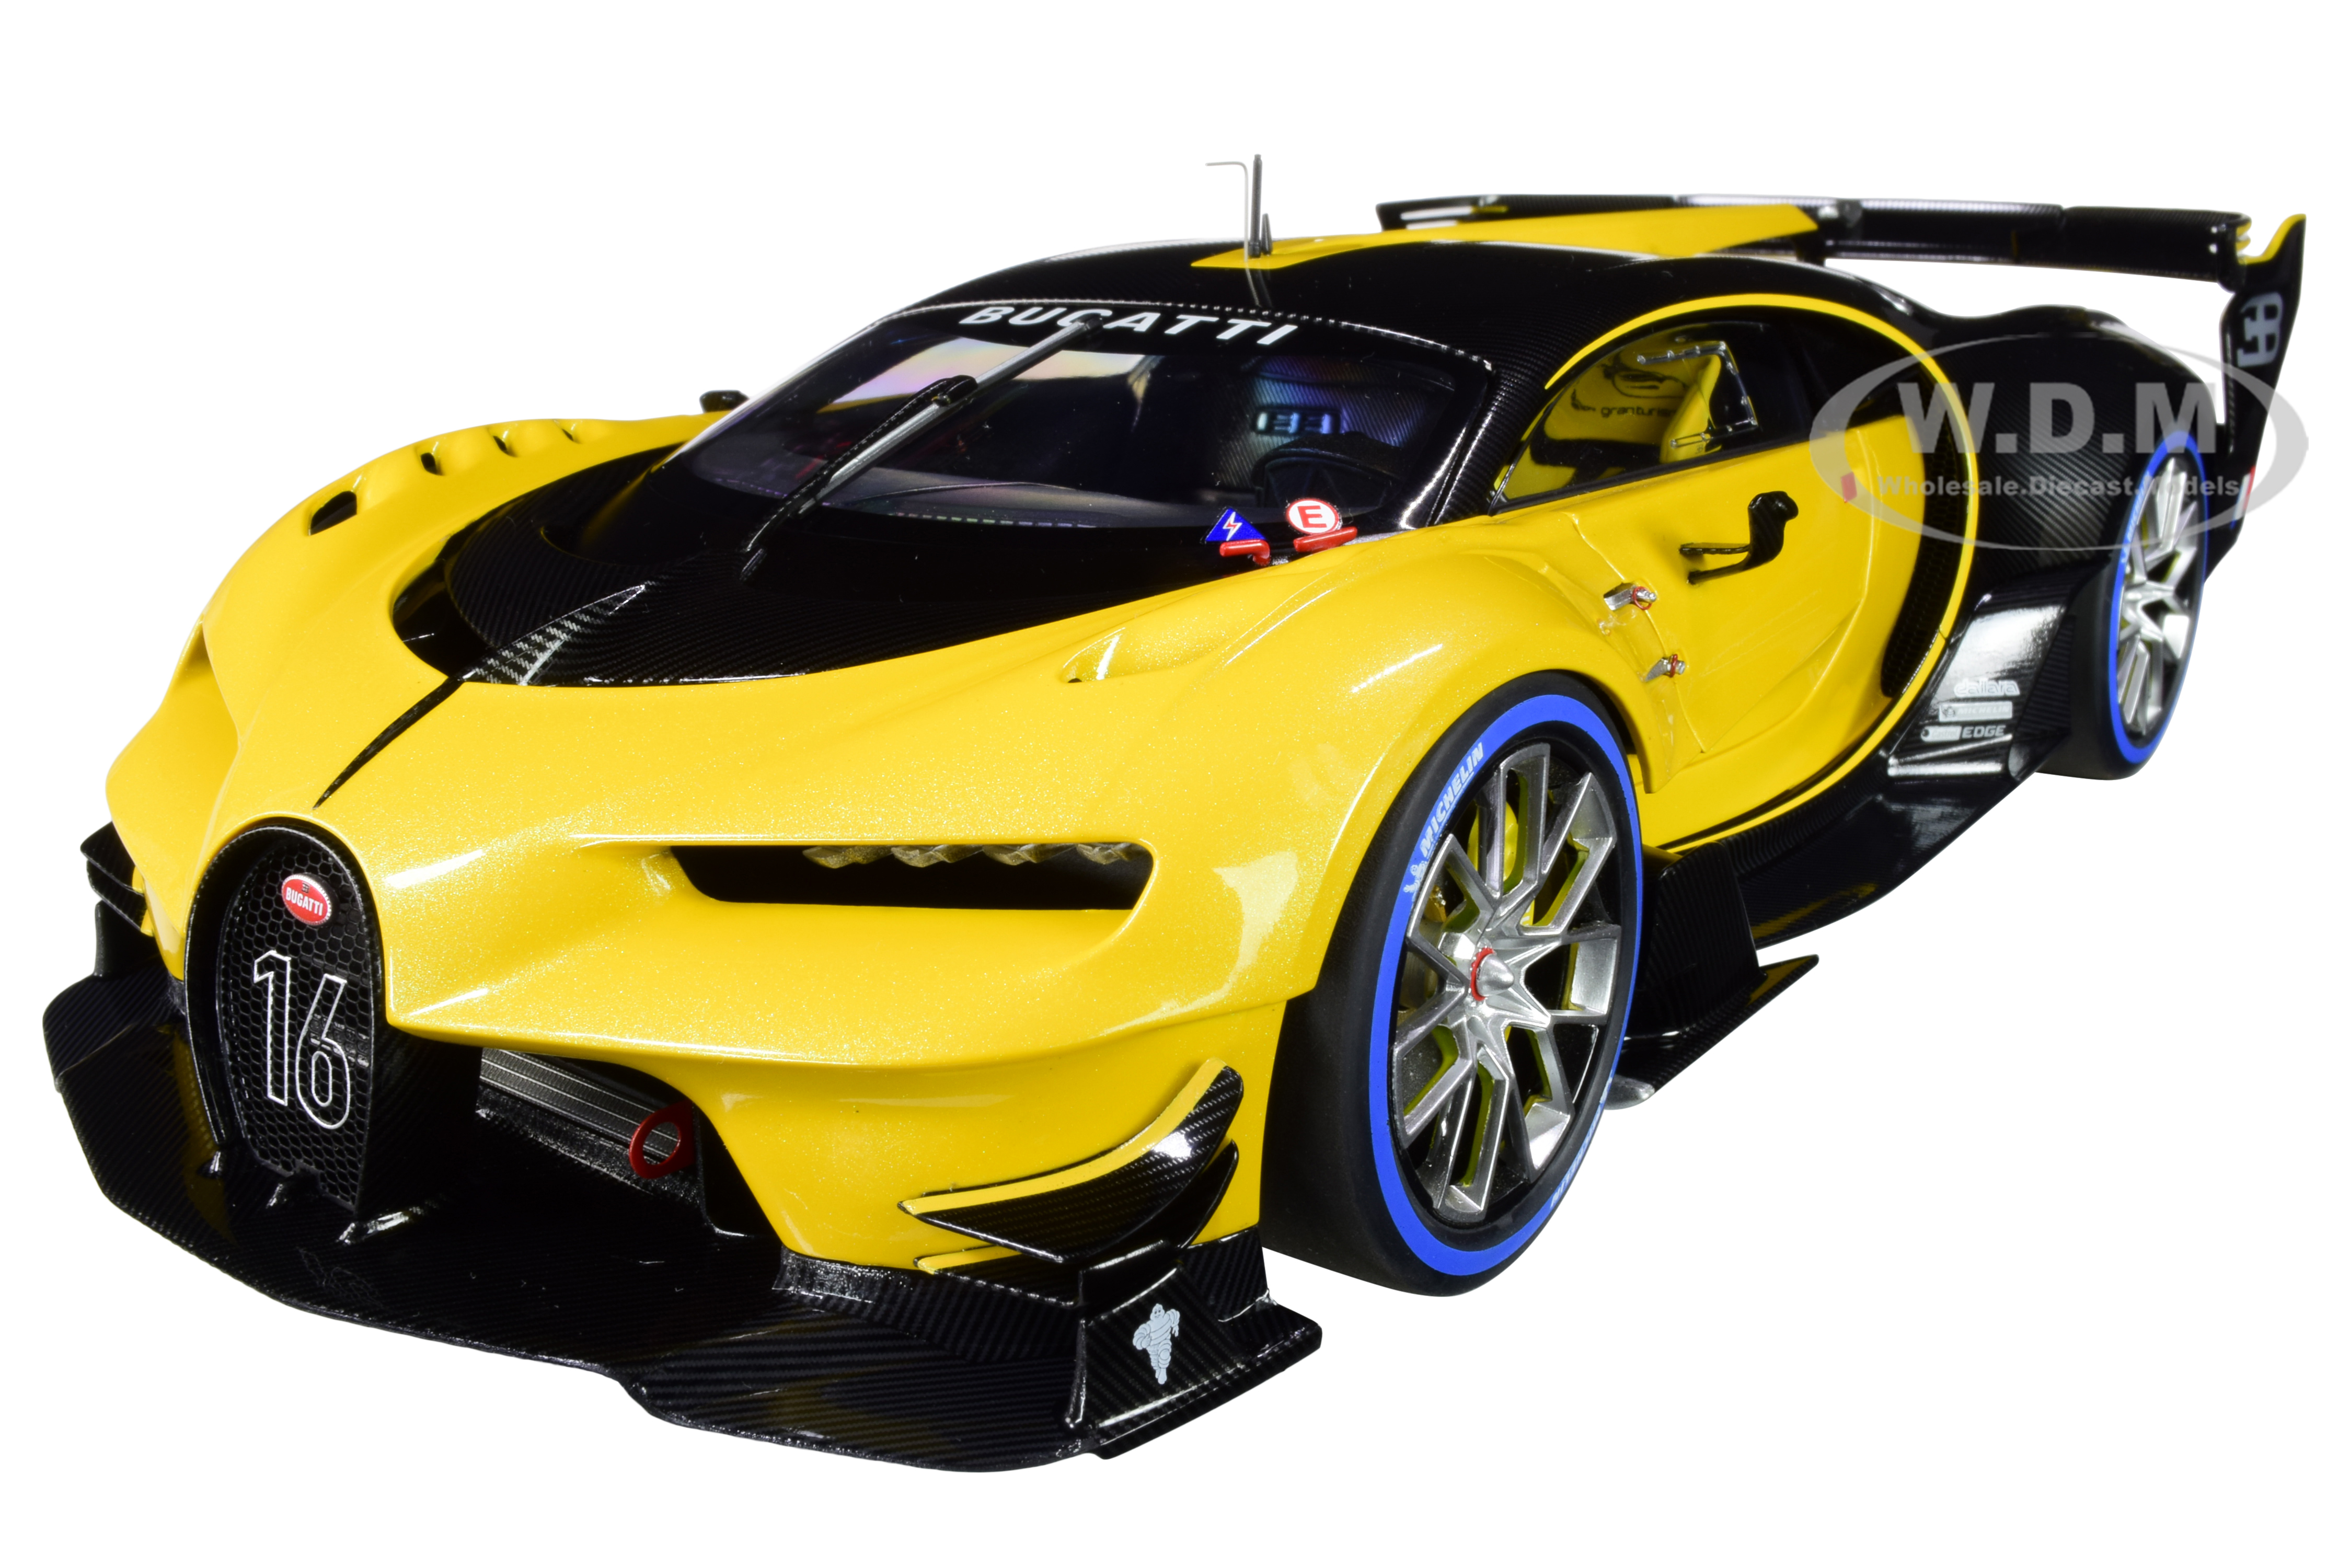 Bugatti Vision Gran Turismo "16" Giallo Midas / Metallic Yellow And Carbon Fiber 1/18 Model Car By Autoart